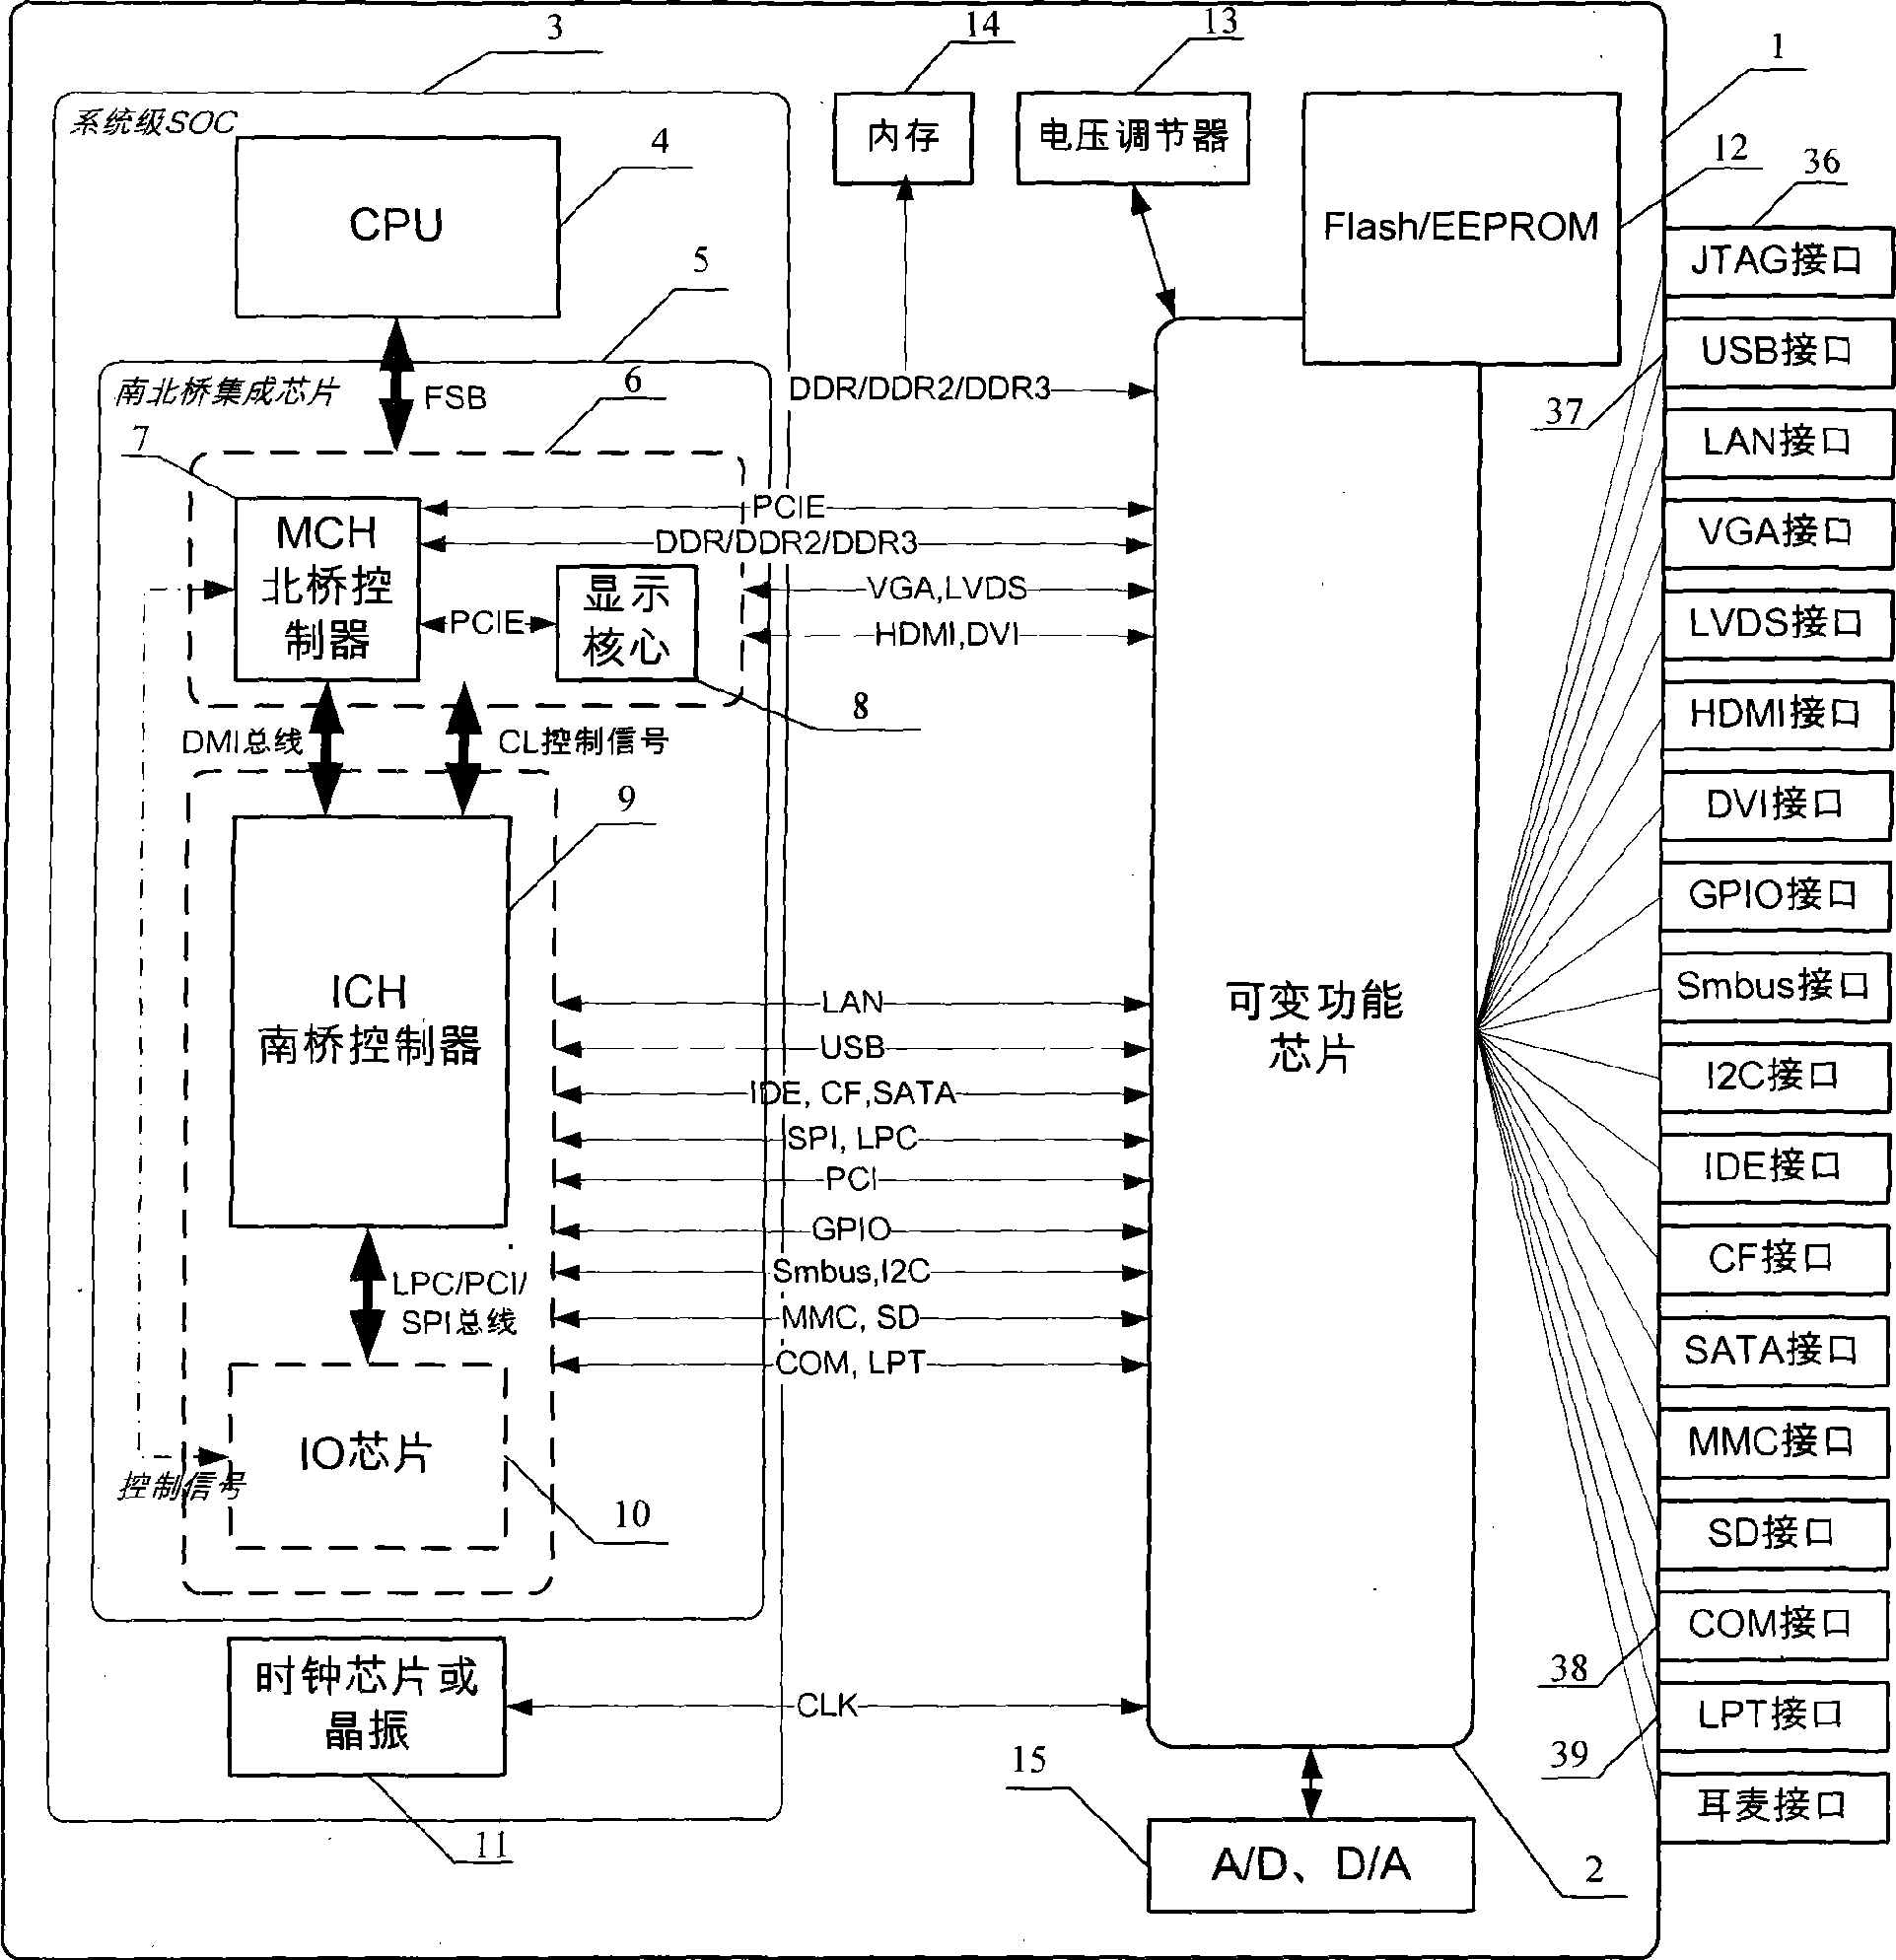 Function-variable portable computer mainboard